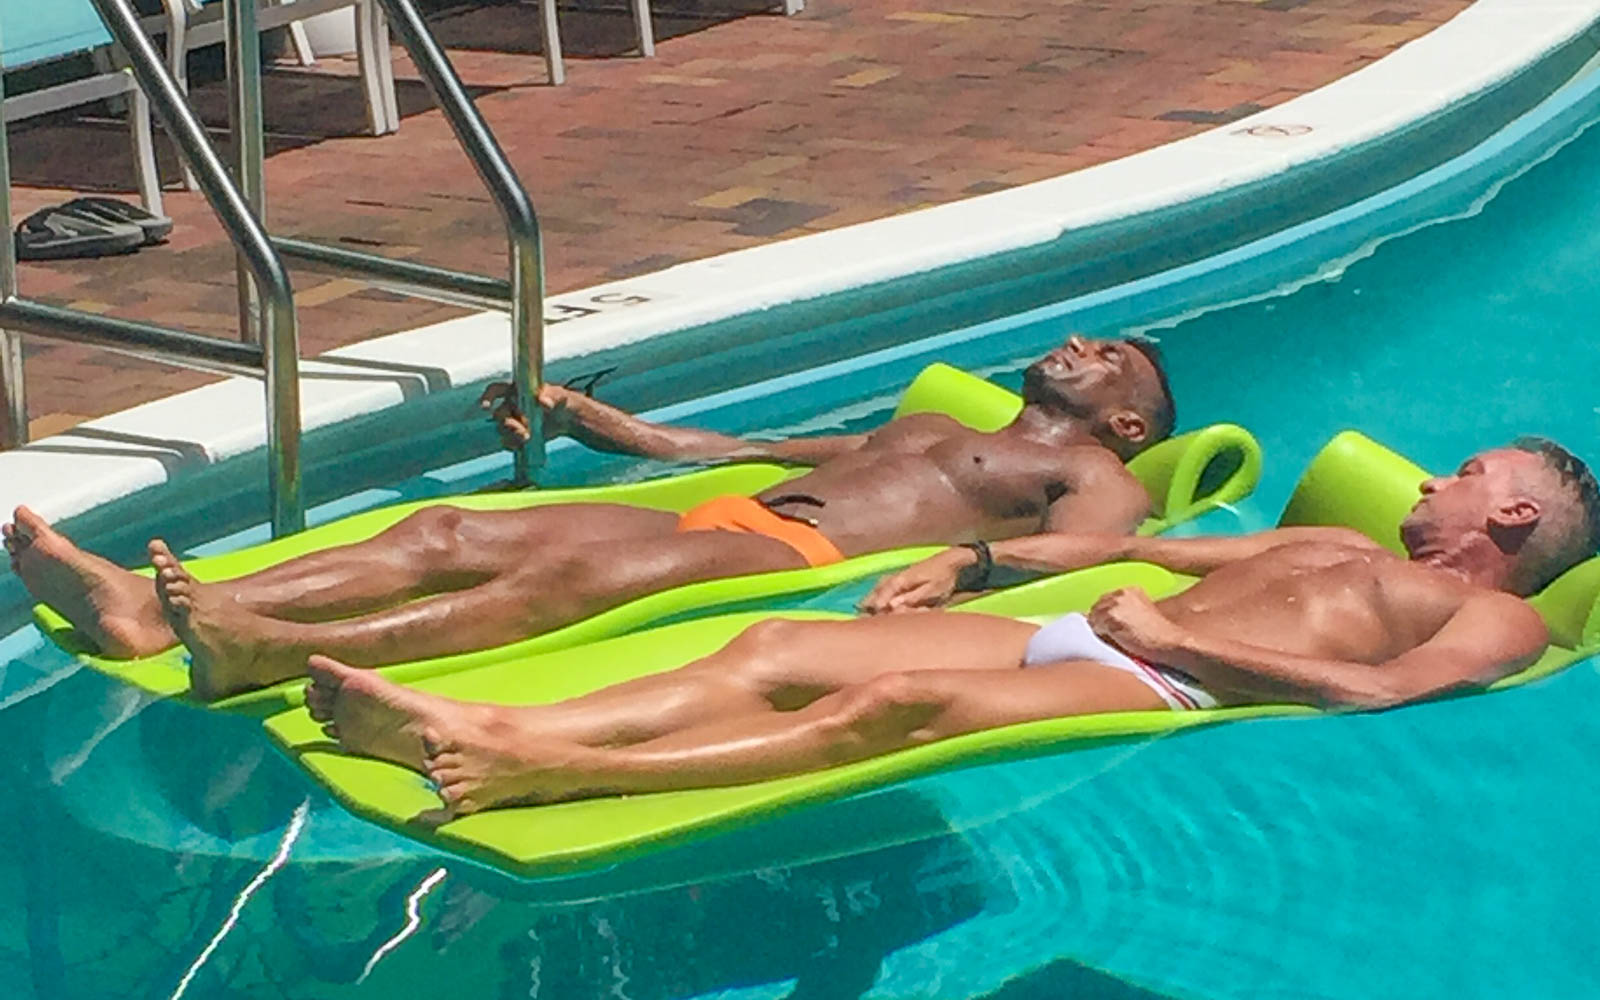 barbora slavikova share erection at nudist resort photos